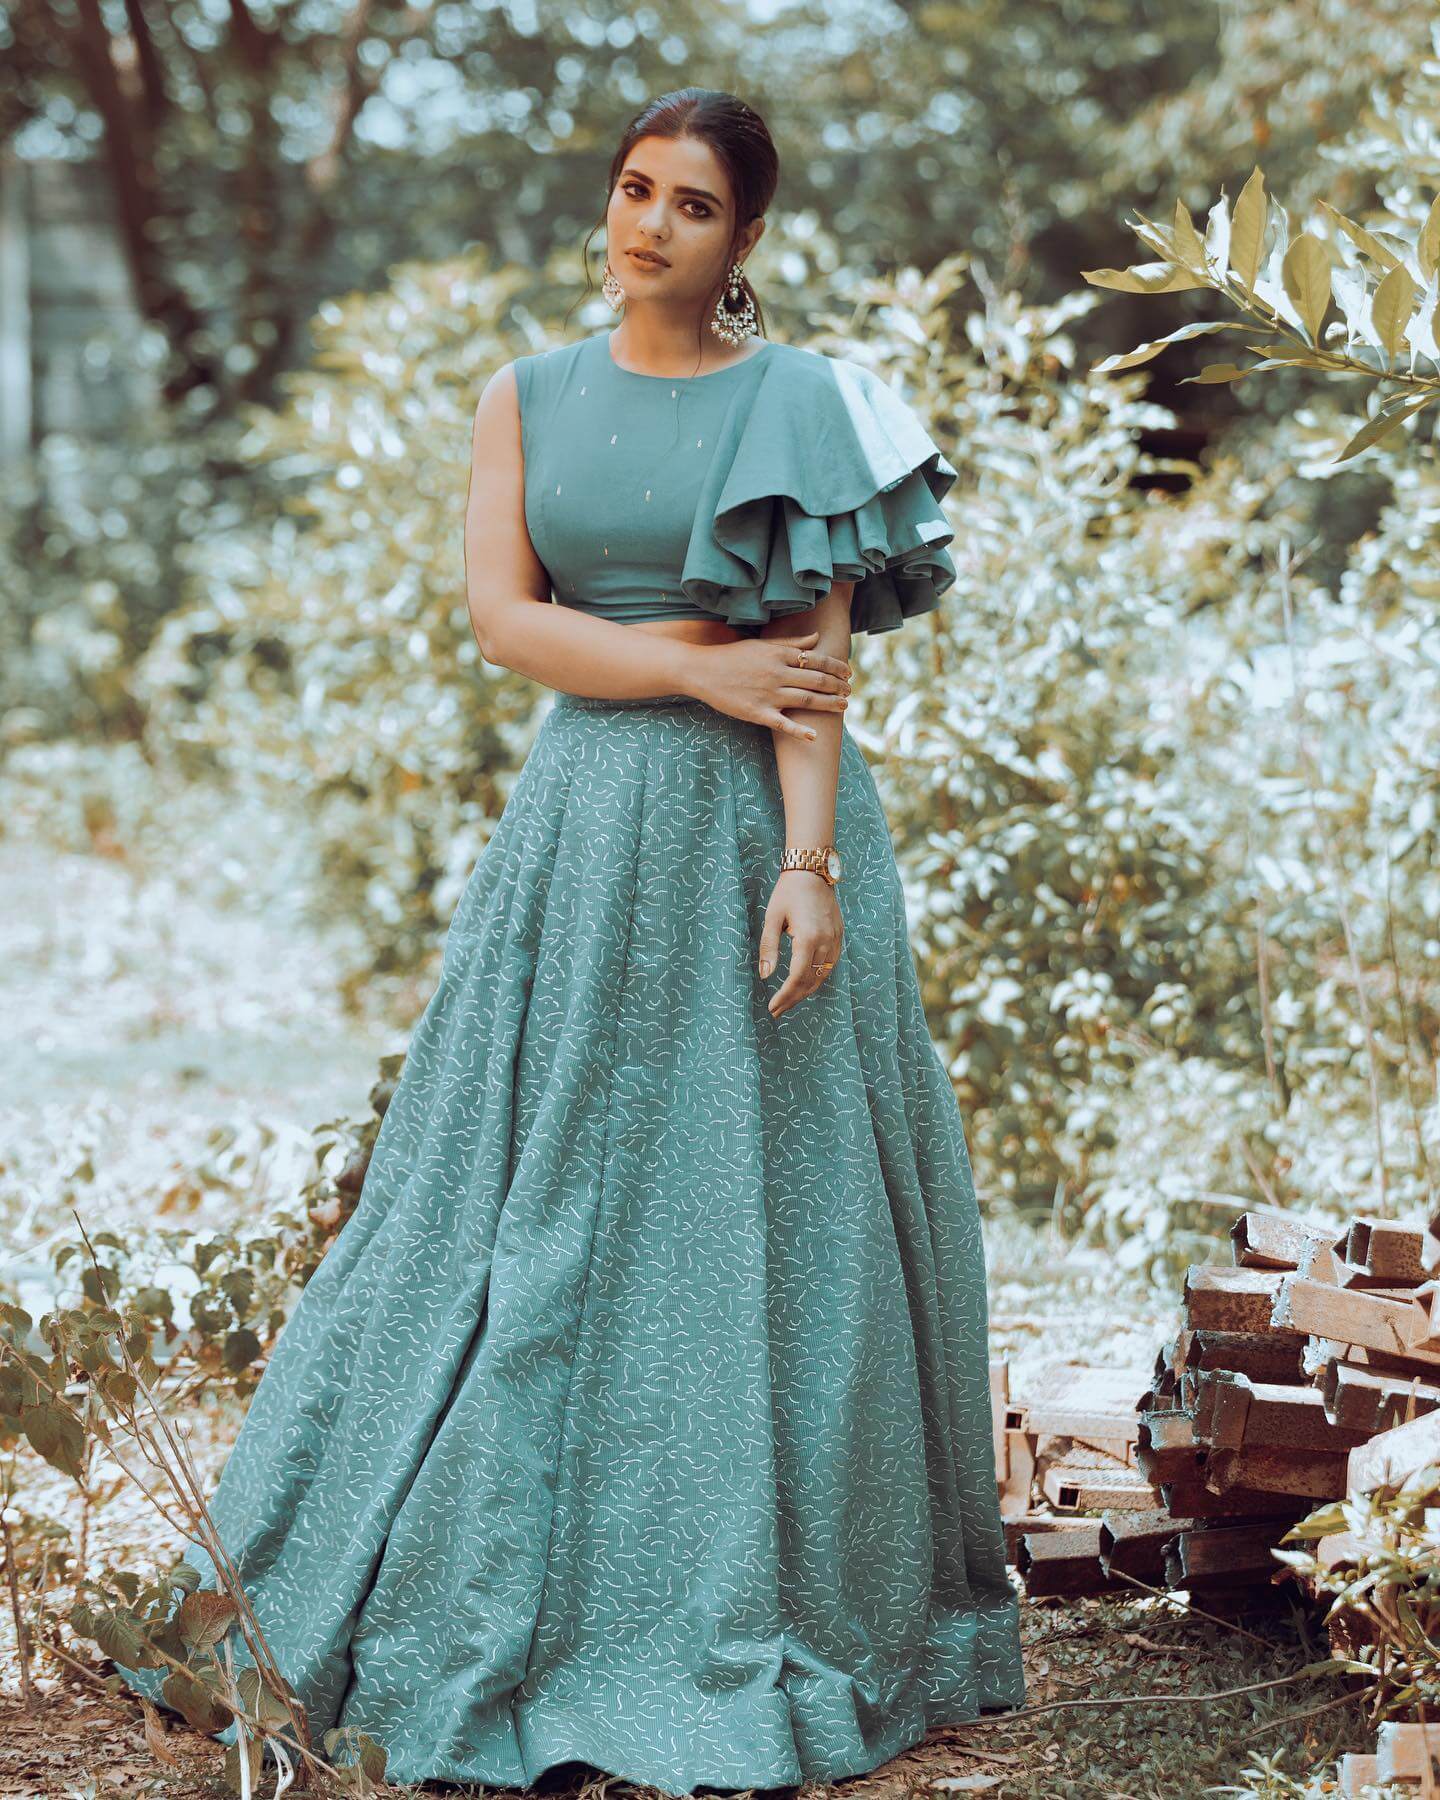 Aishwarya Rajesh Look Stunning In Aqua Green Skirt Set Outfit